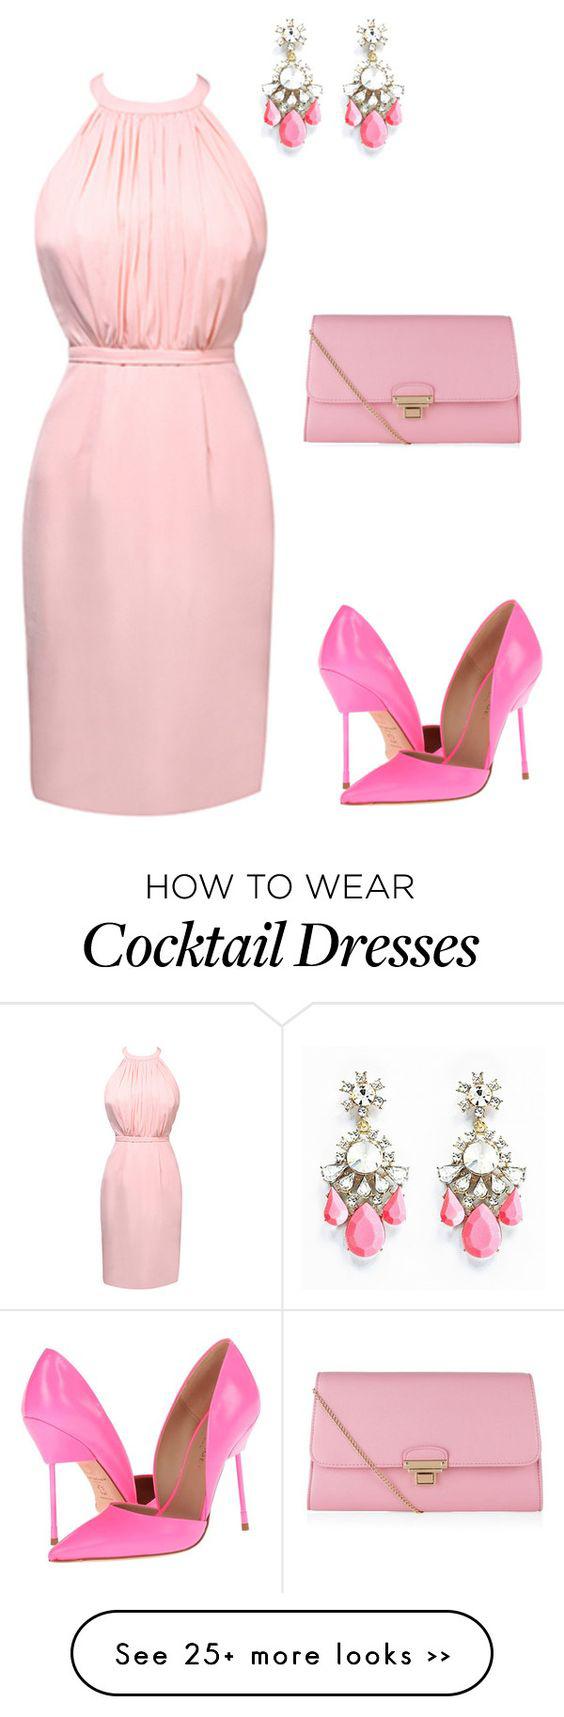 pos tha valis me stil ena cocktail roz forema 3 - Πώς θα βάλεις με στιλ ένα cocktail ροζ φόρεμα